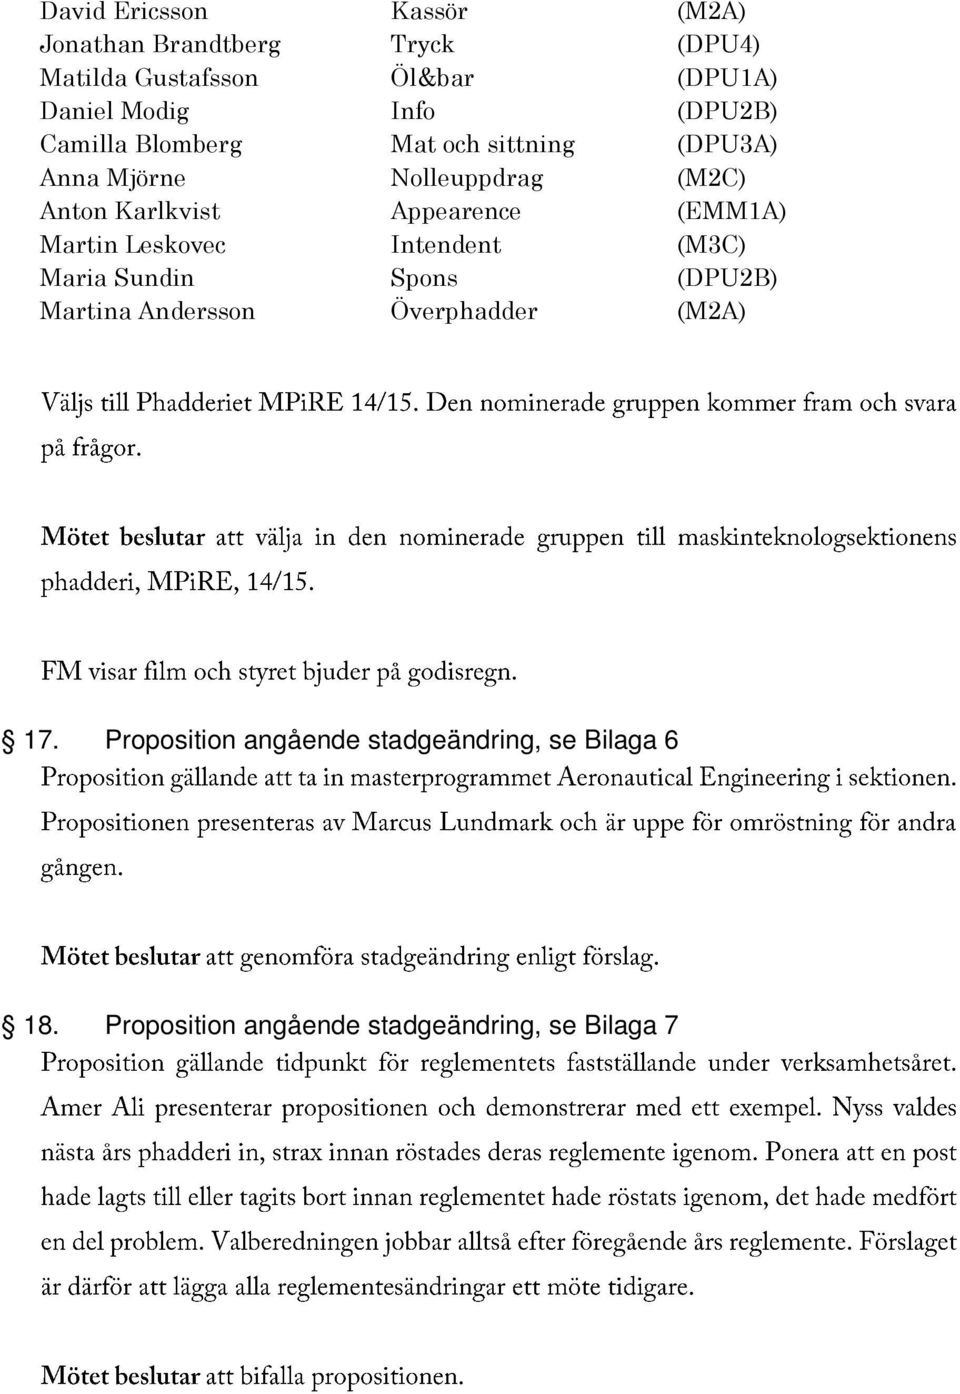 Karlkvist Appearence (EMM1A) Martin Leskovec Intendent (M3C) Maria Sundin Spons (DPU2B) Martina Andersson